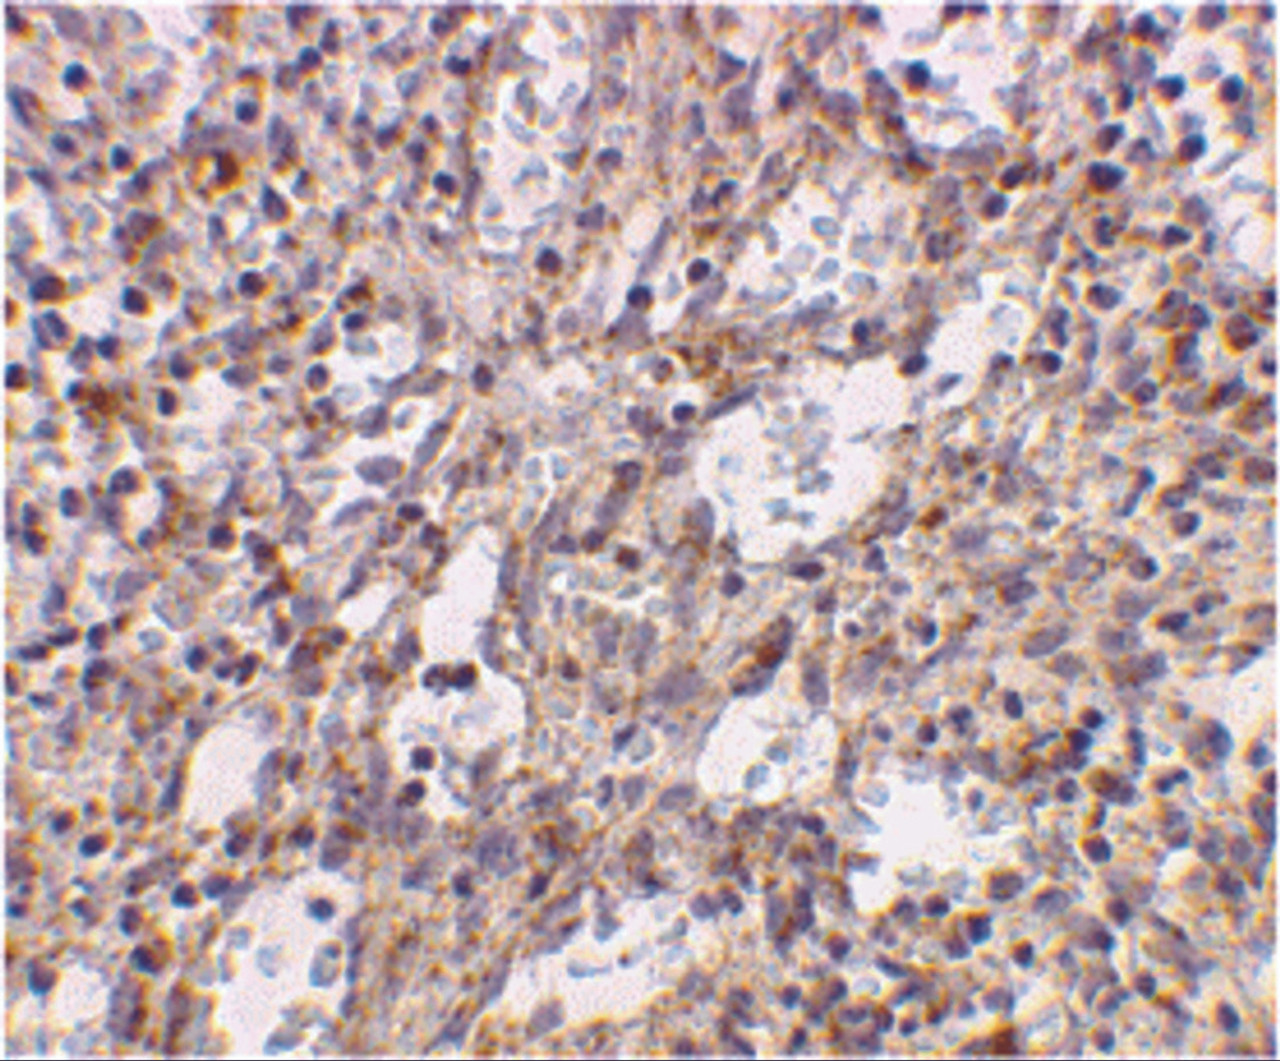 Immunohistochemical staining of human spleen cells using TLR2 antibody at 2 ug/mL.